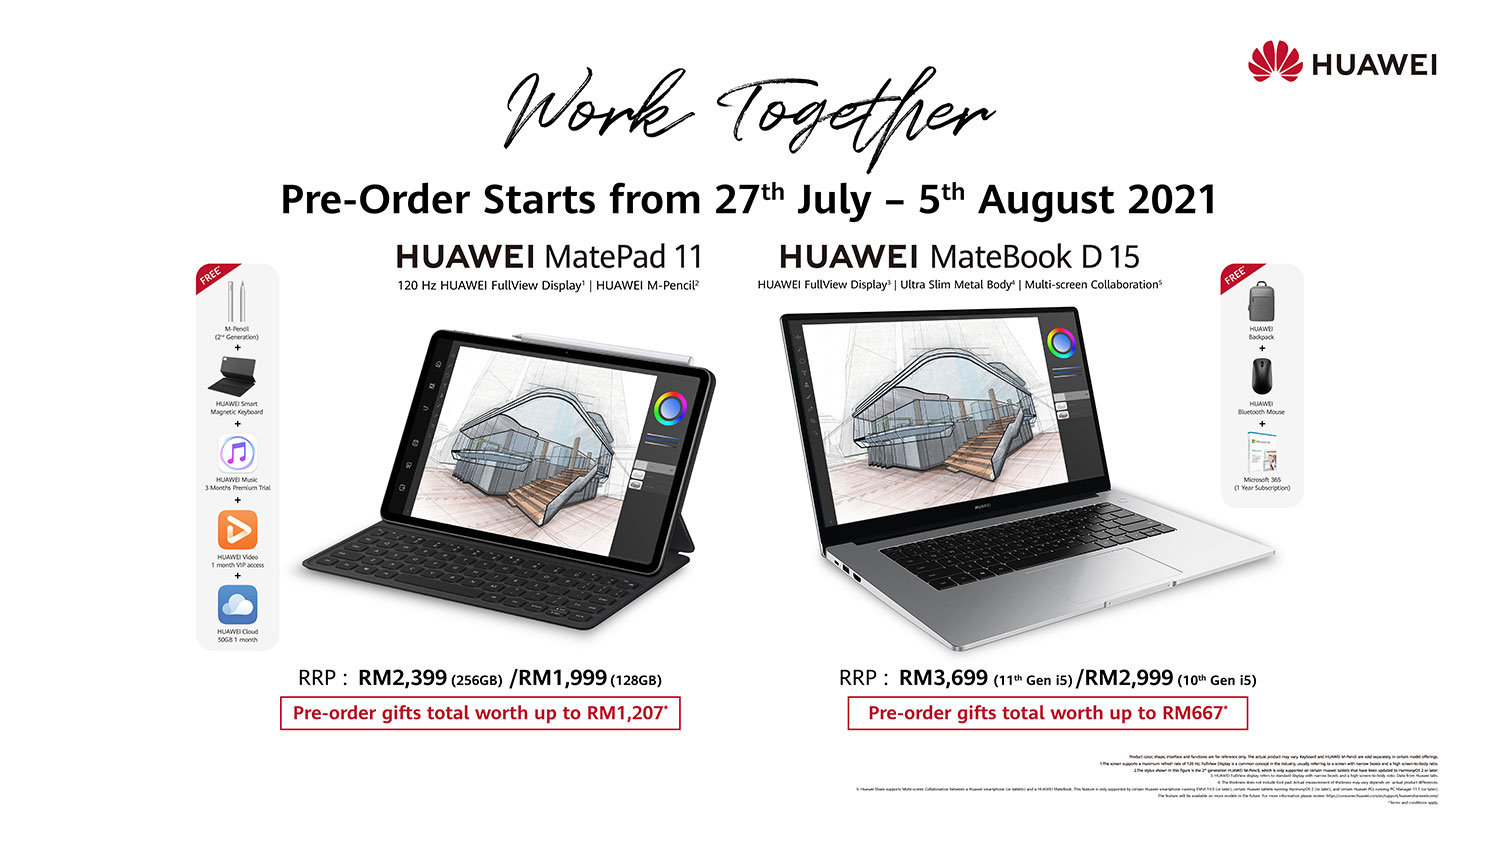 HUAWEI MatePad 11 and MateBook D15 Pre-Order